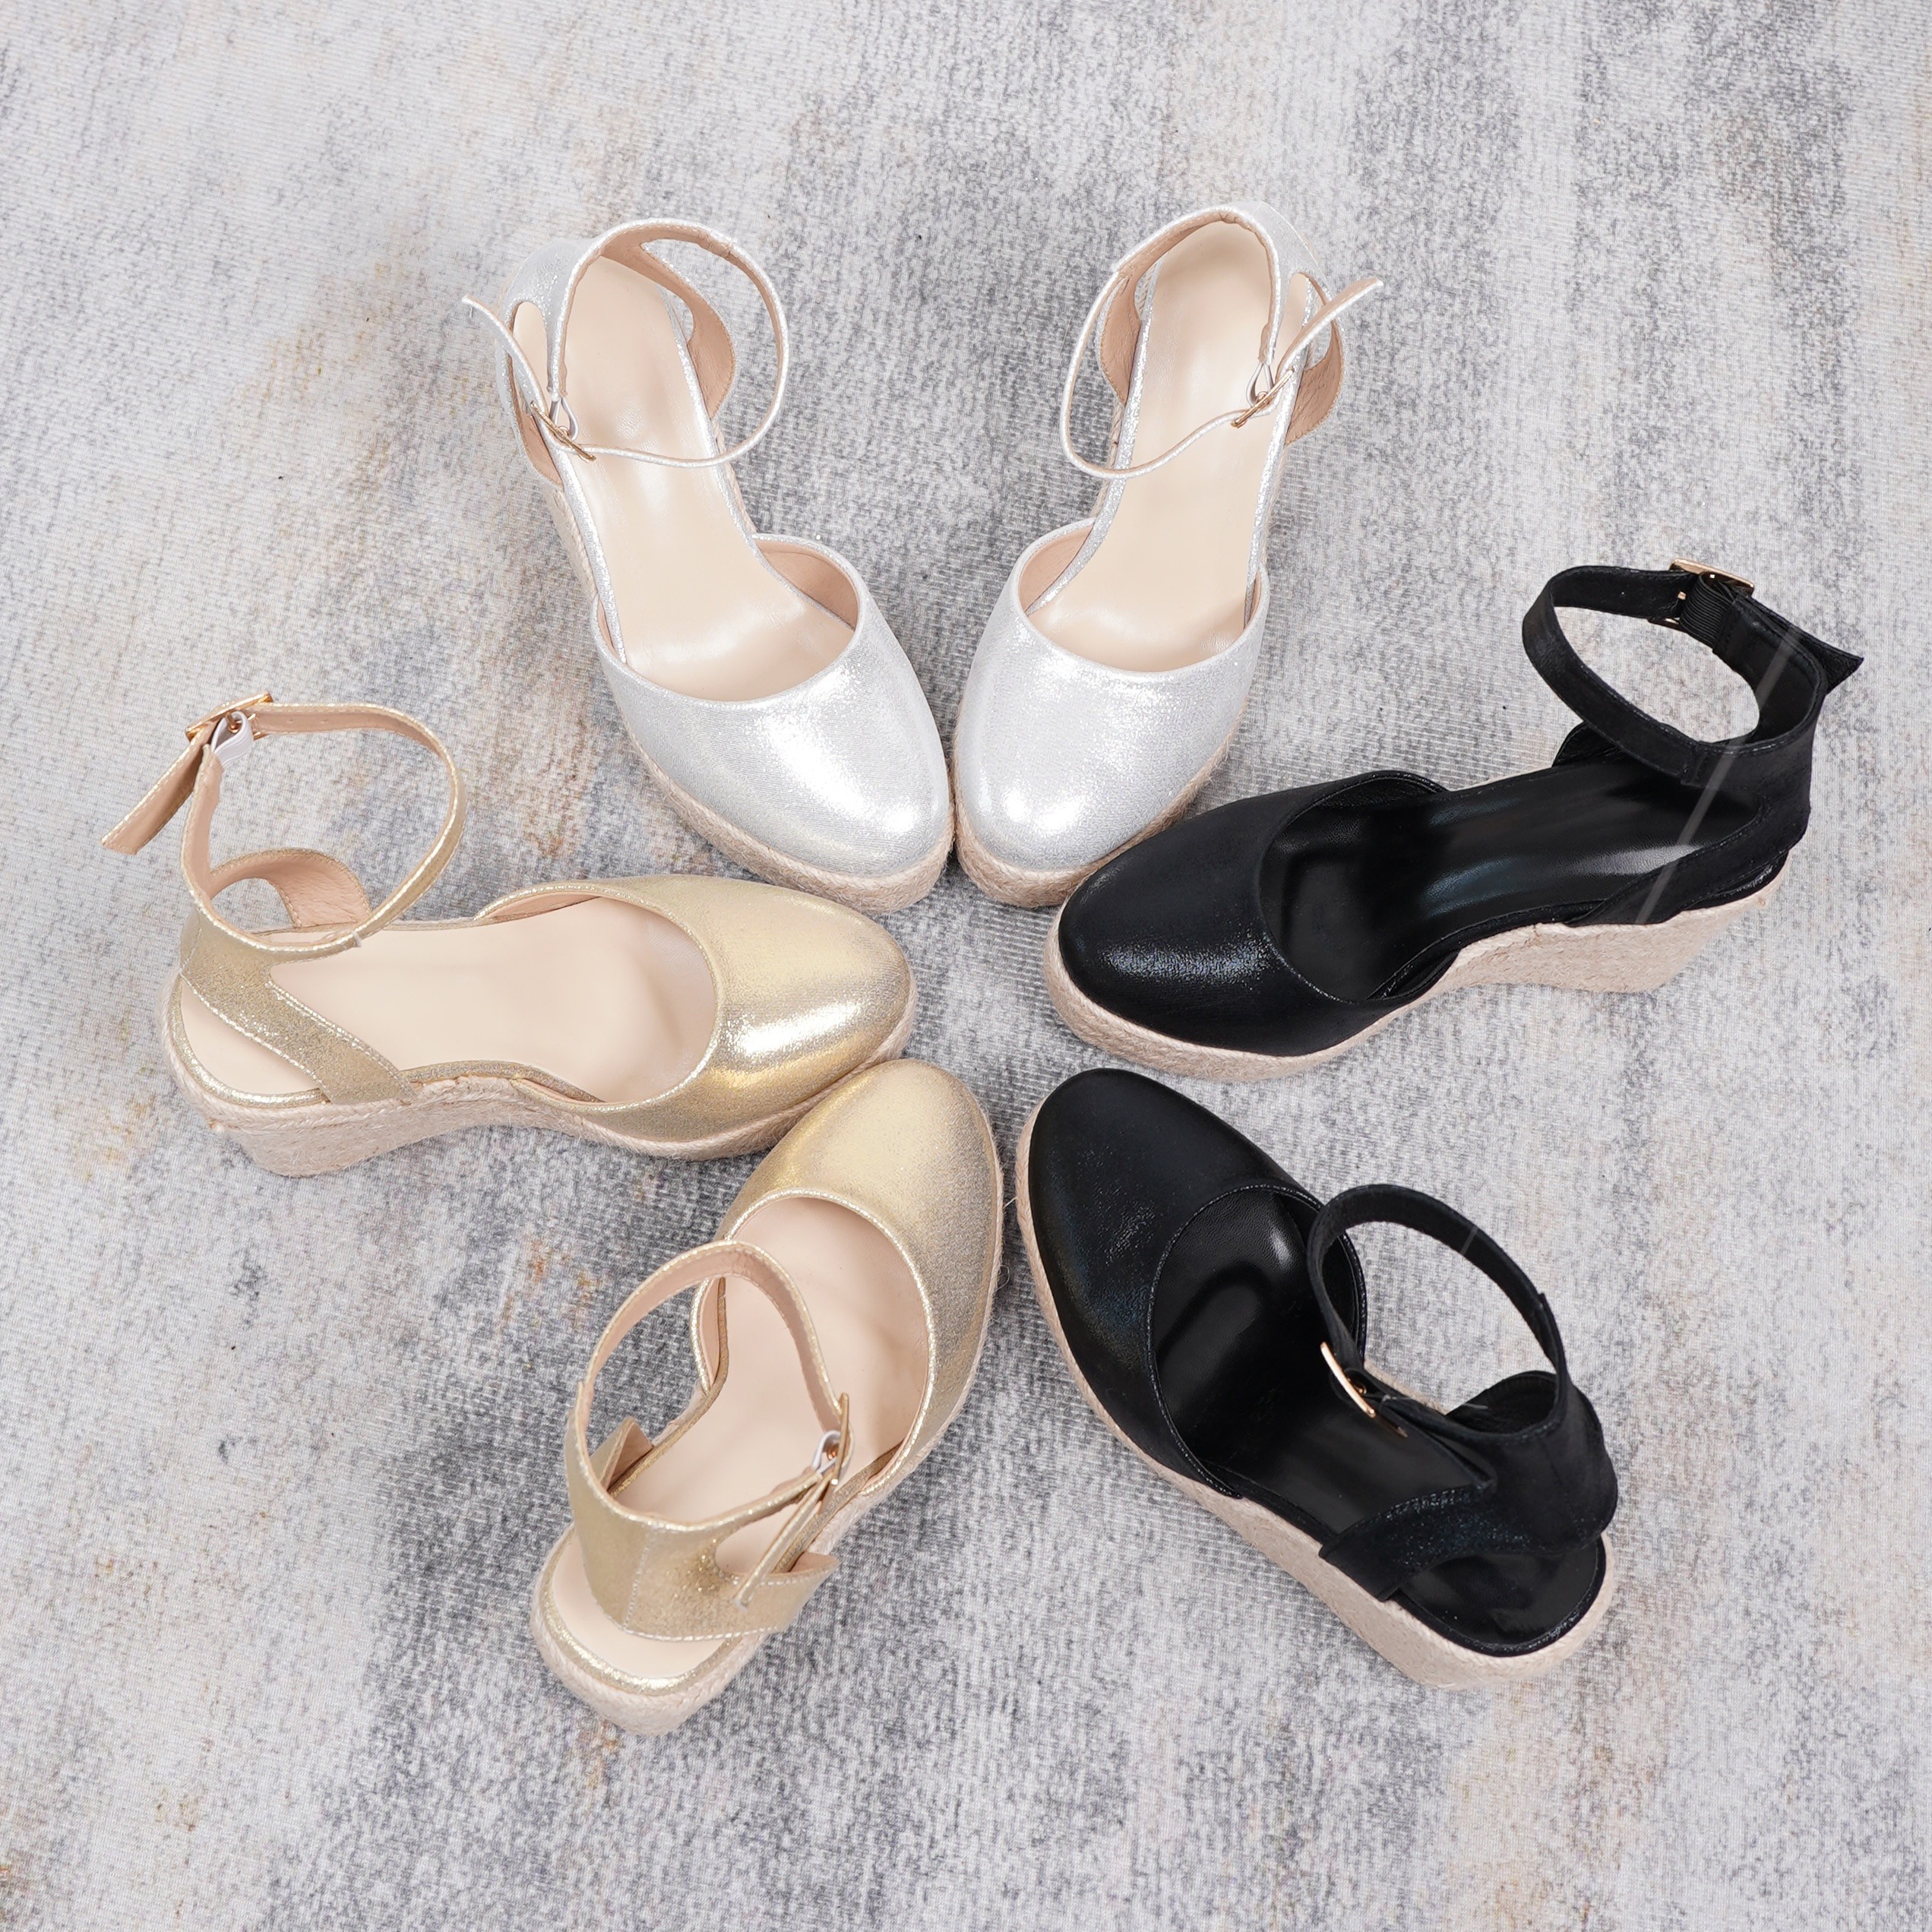 

Women's Solid Color Trendy Sandals, Ankle Buckle Strap Platform Casual Shoes, Closed Toe Espadrilles Wedge Shoes